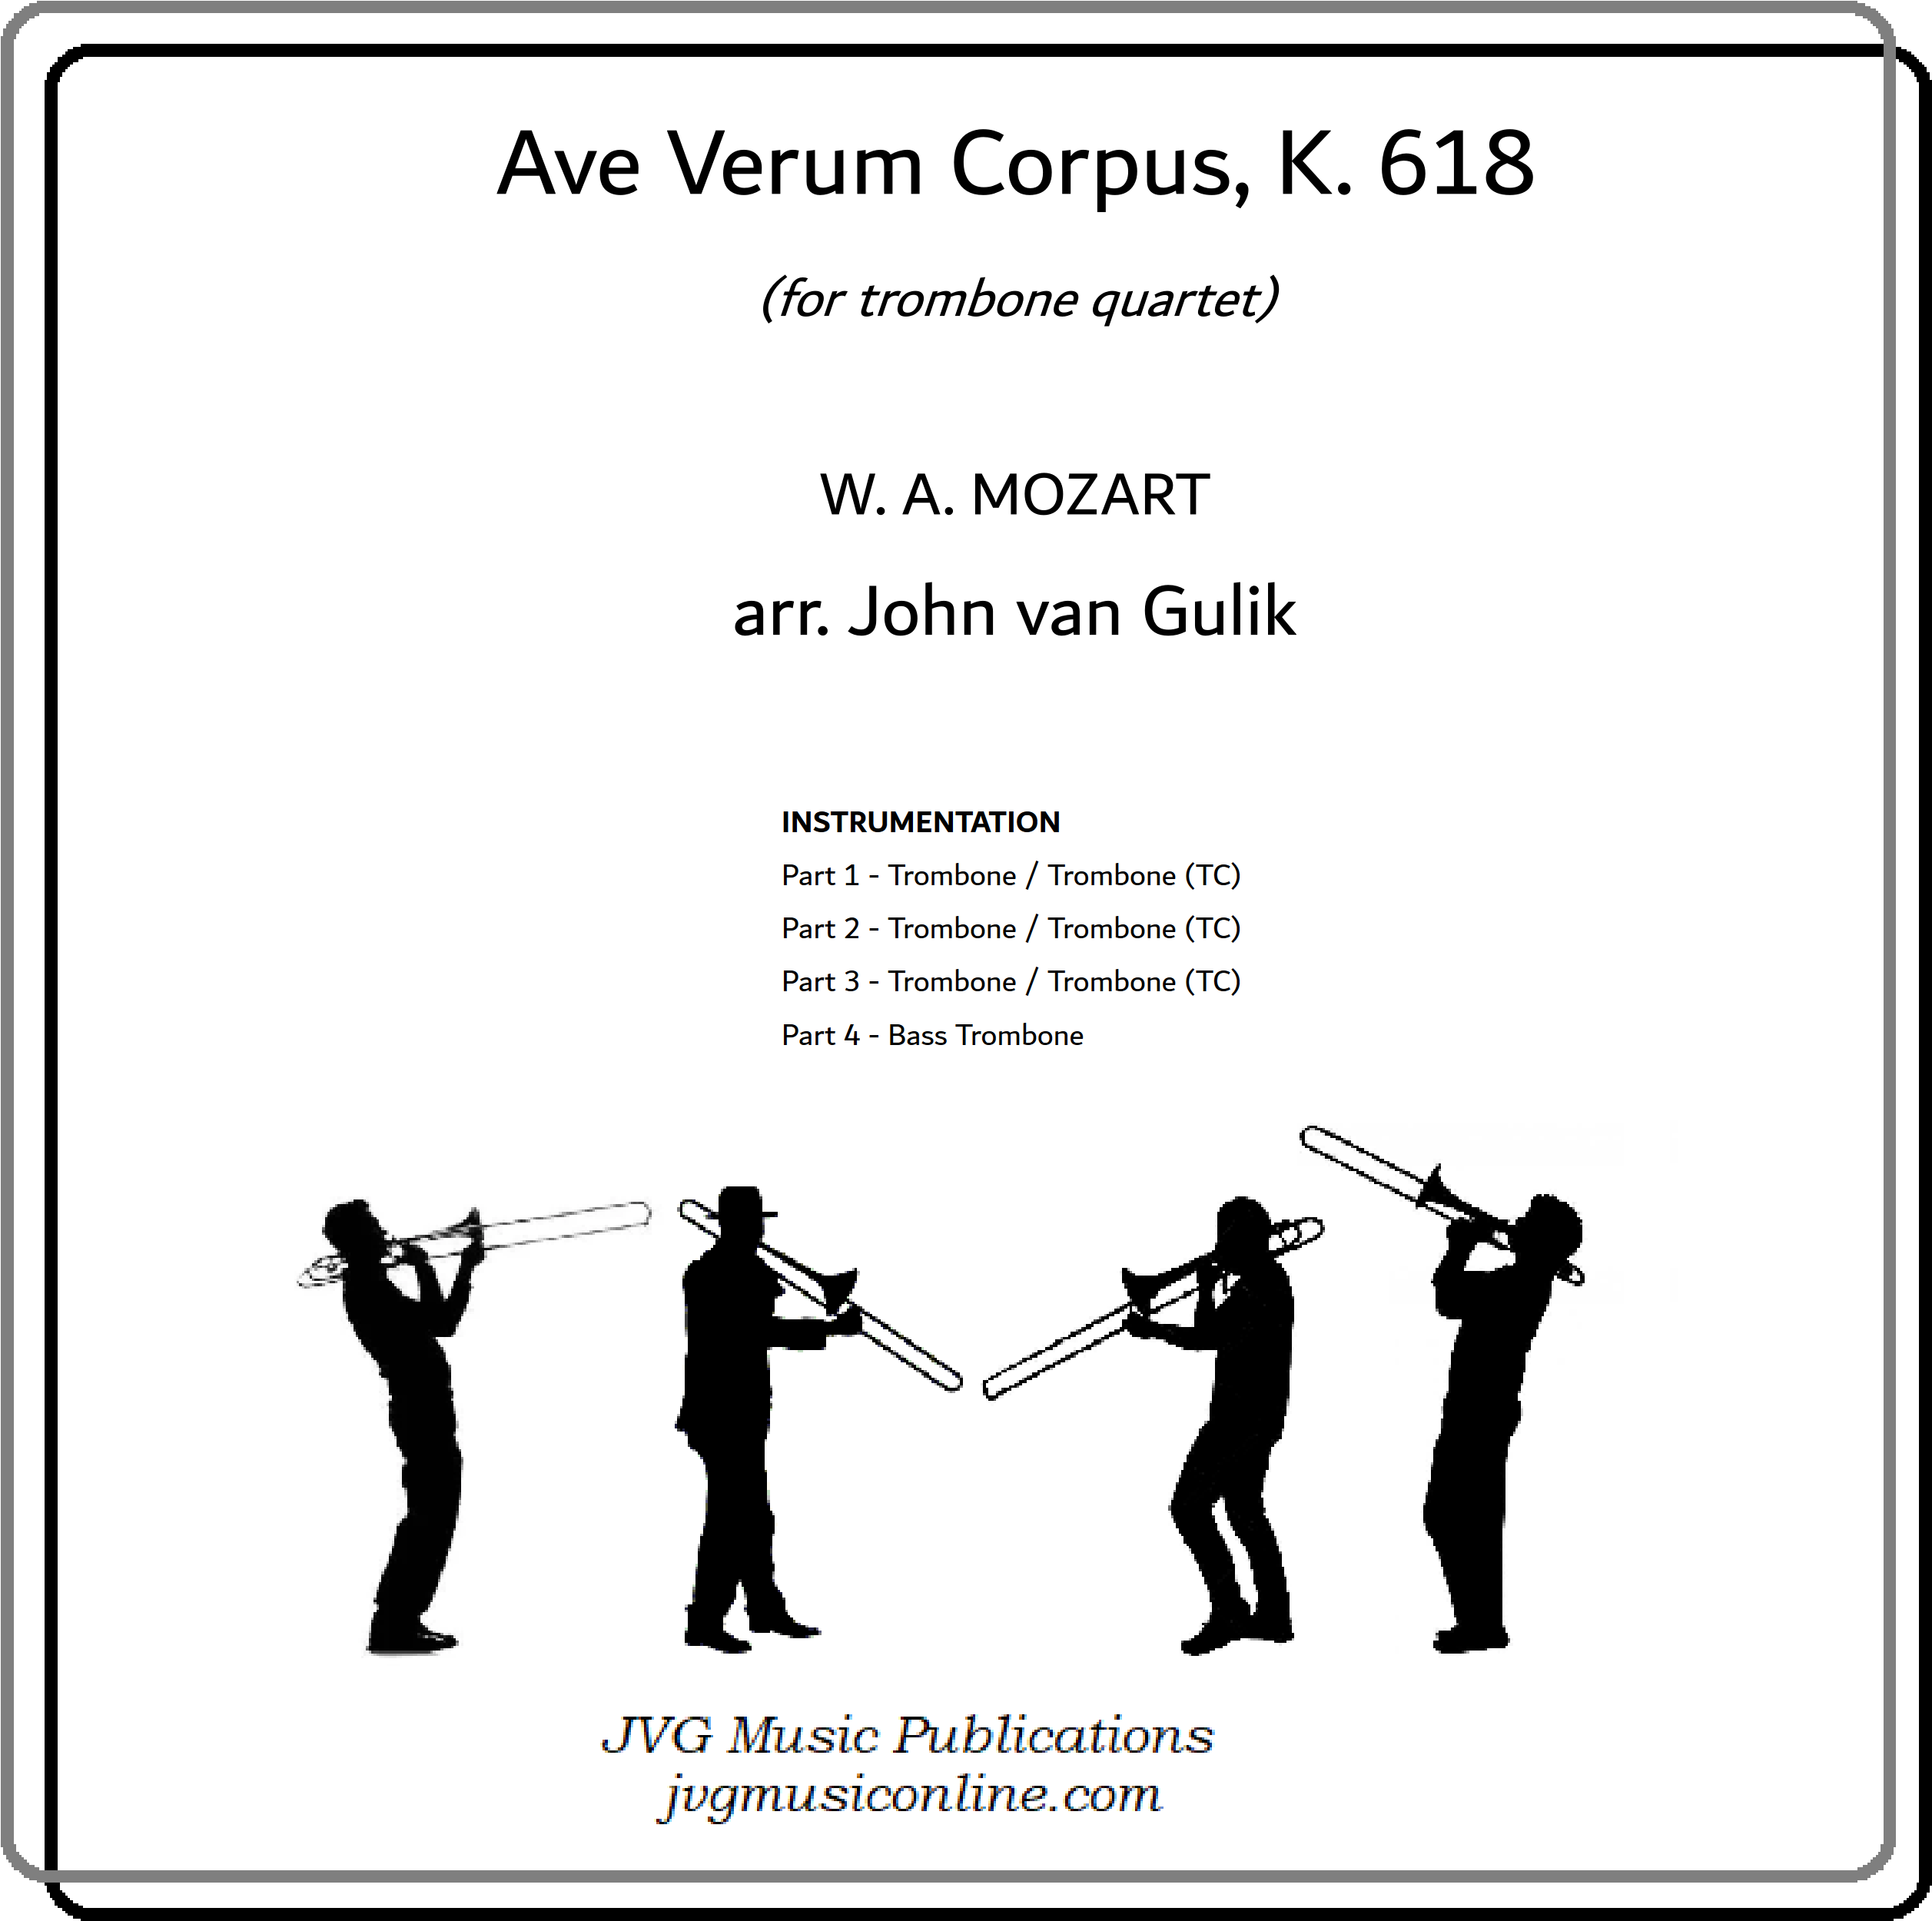 JVG 7002 Quartets Ave Verum 0001 768iee